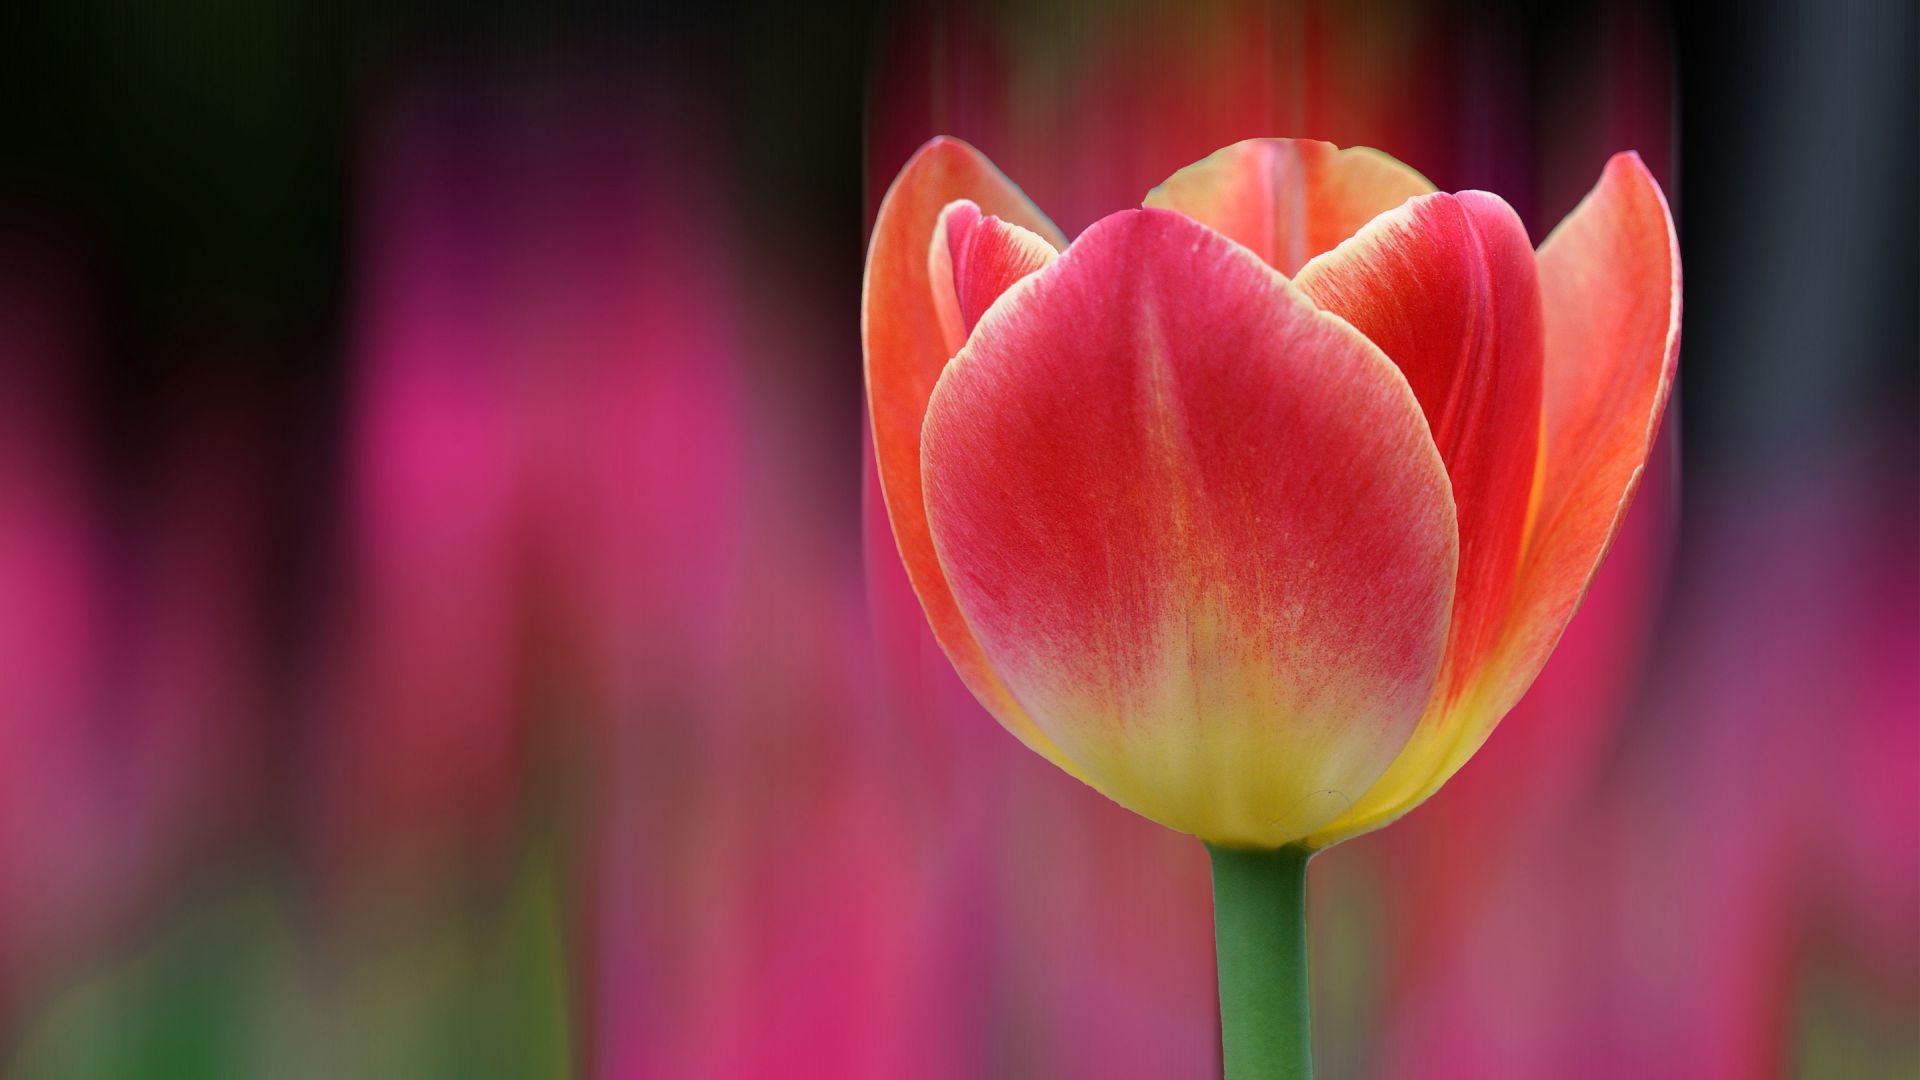 Desktop Wallpaper Orange Tulip Flower Close Up Hd Image Picture Background Mwkqcd